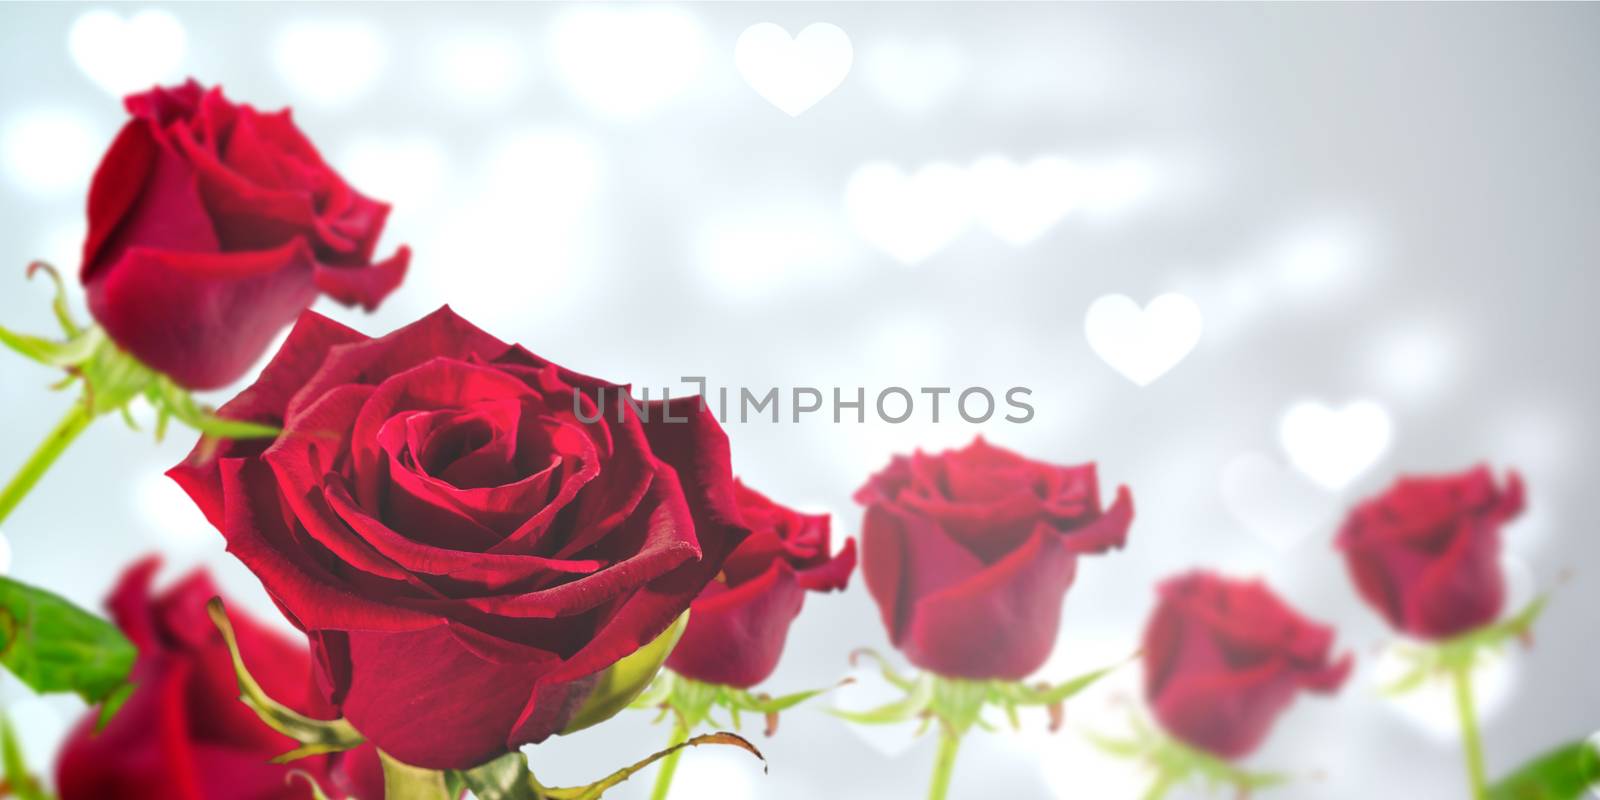 Red rose against valentines heart design